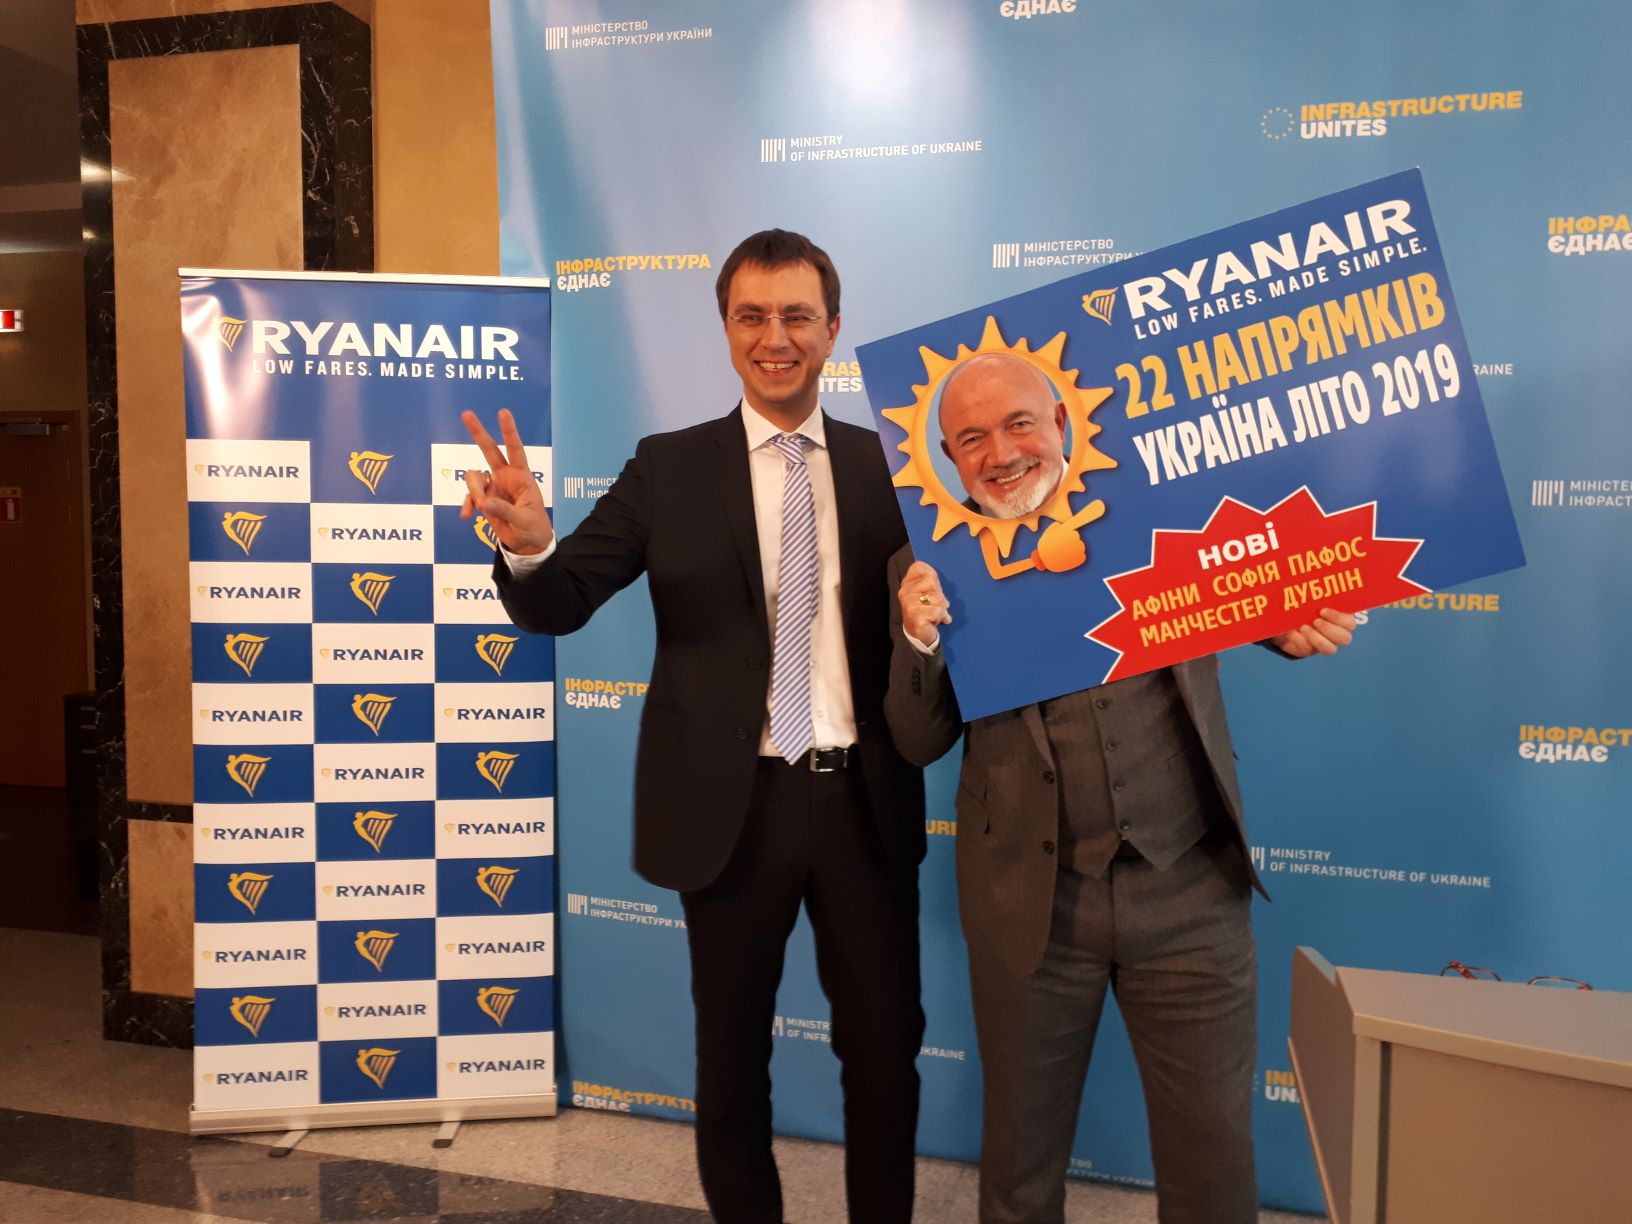 Ryanair Launches New Dublin Route To Kyiv